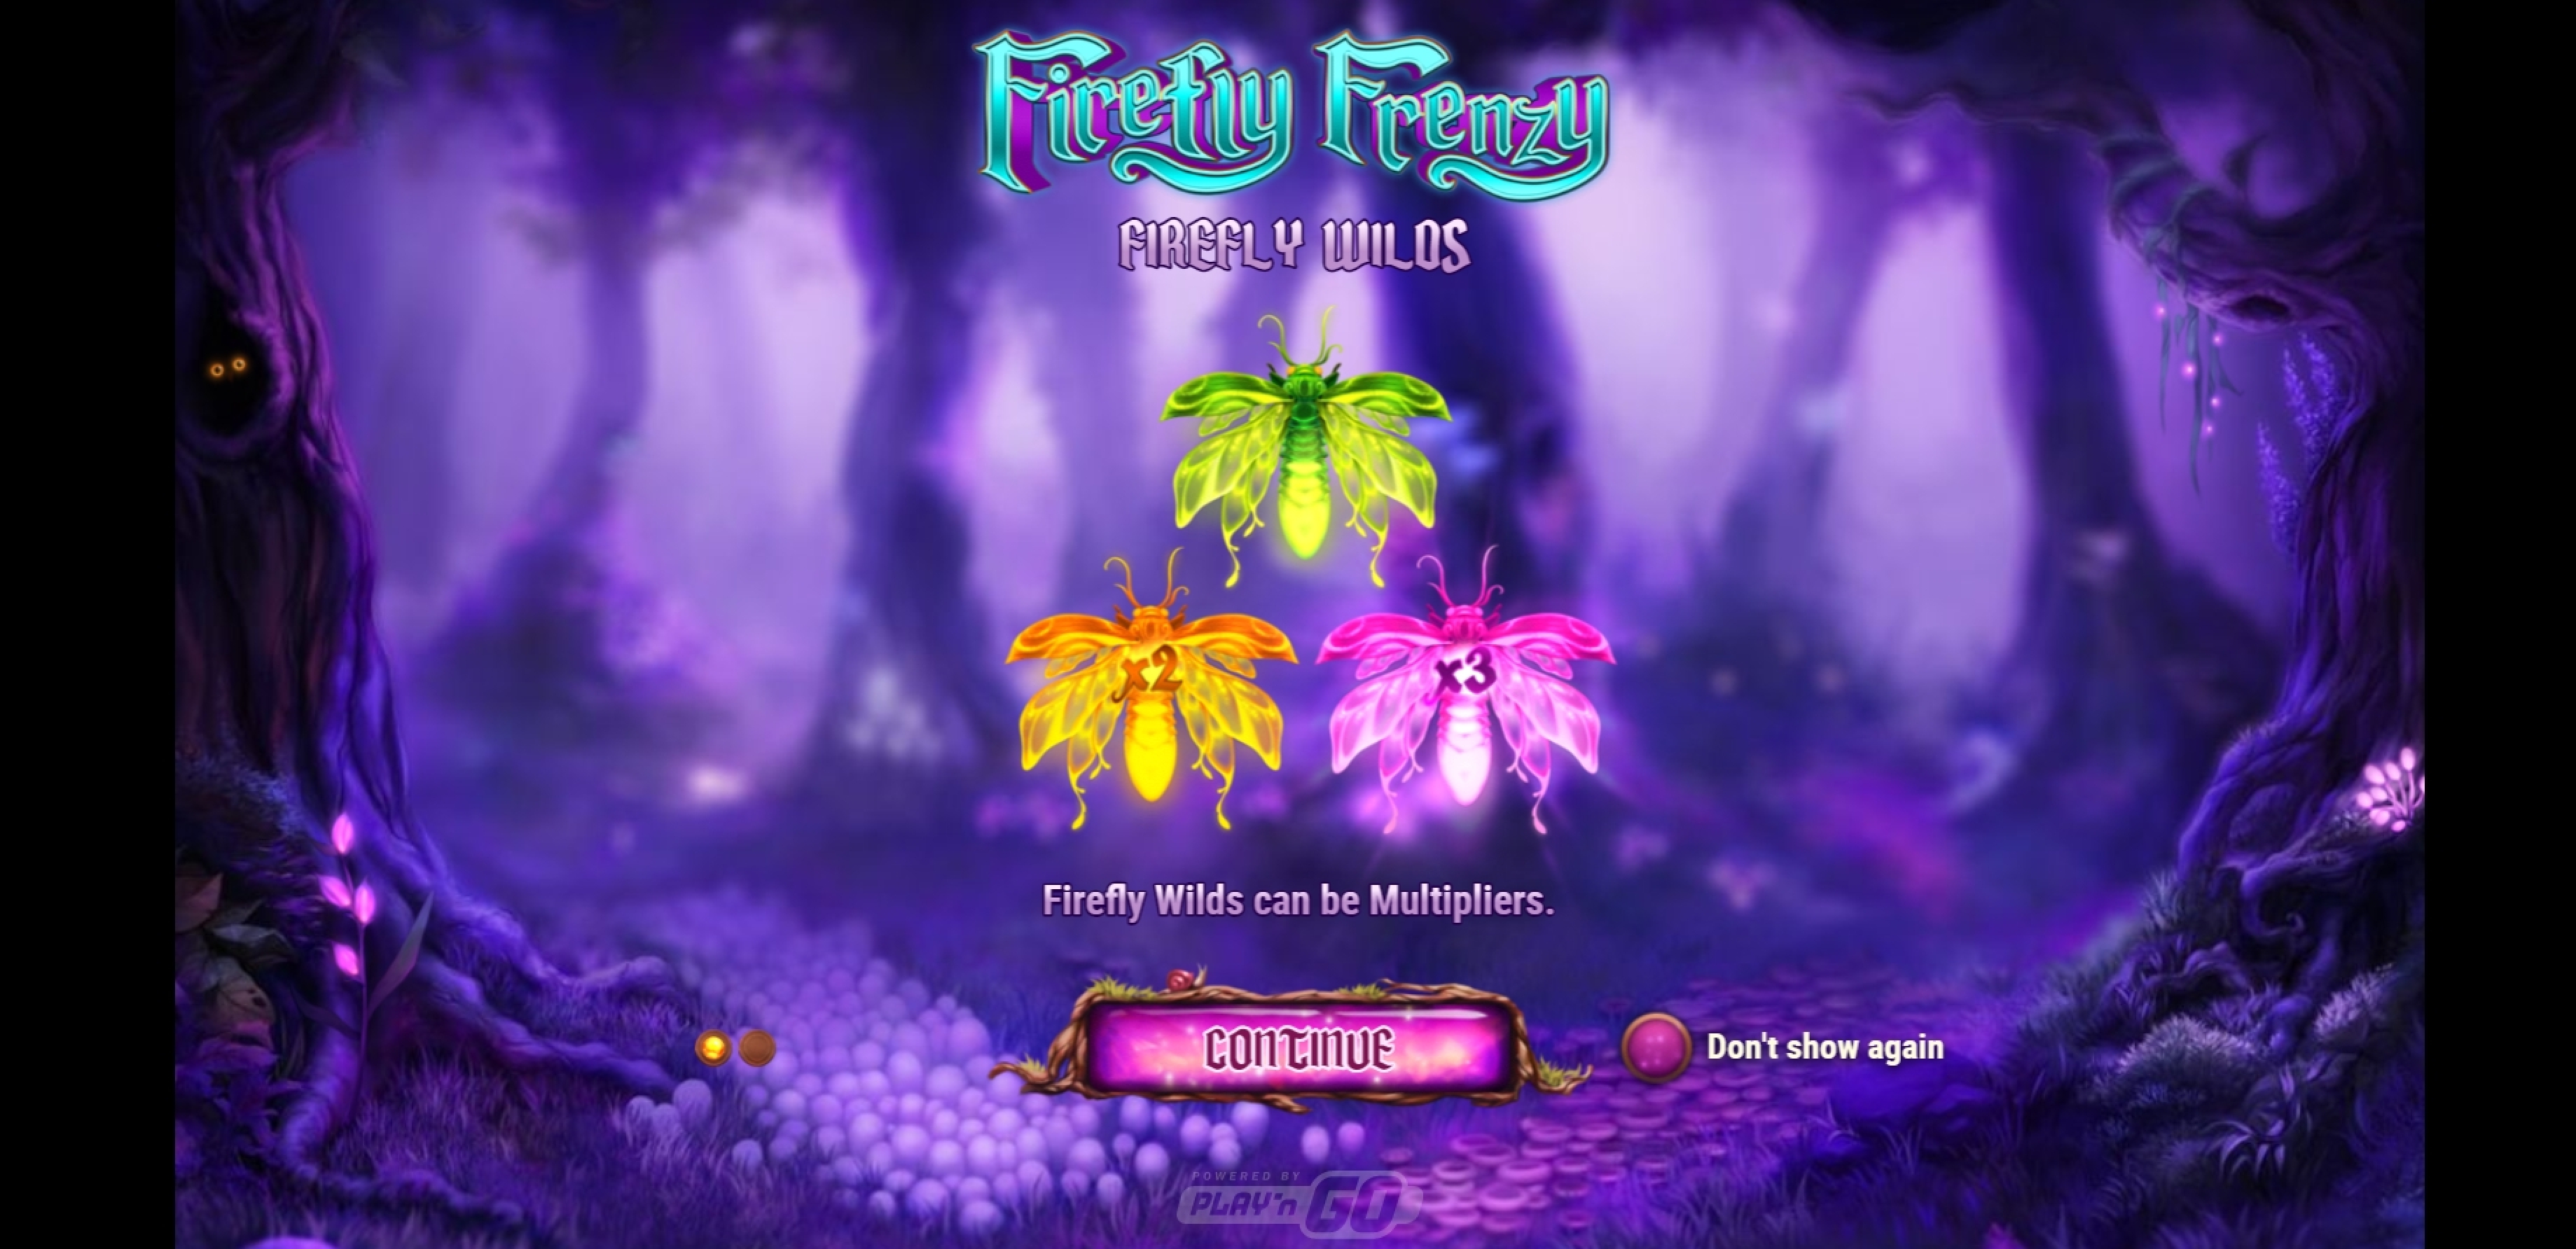 Play Firefly Frenzy Free Casino Slot Game by Playn GO